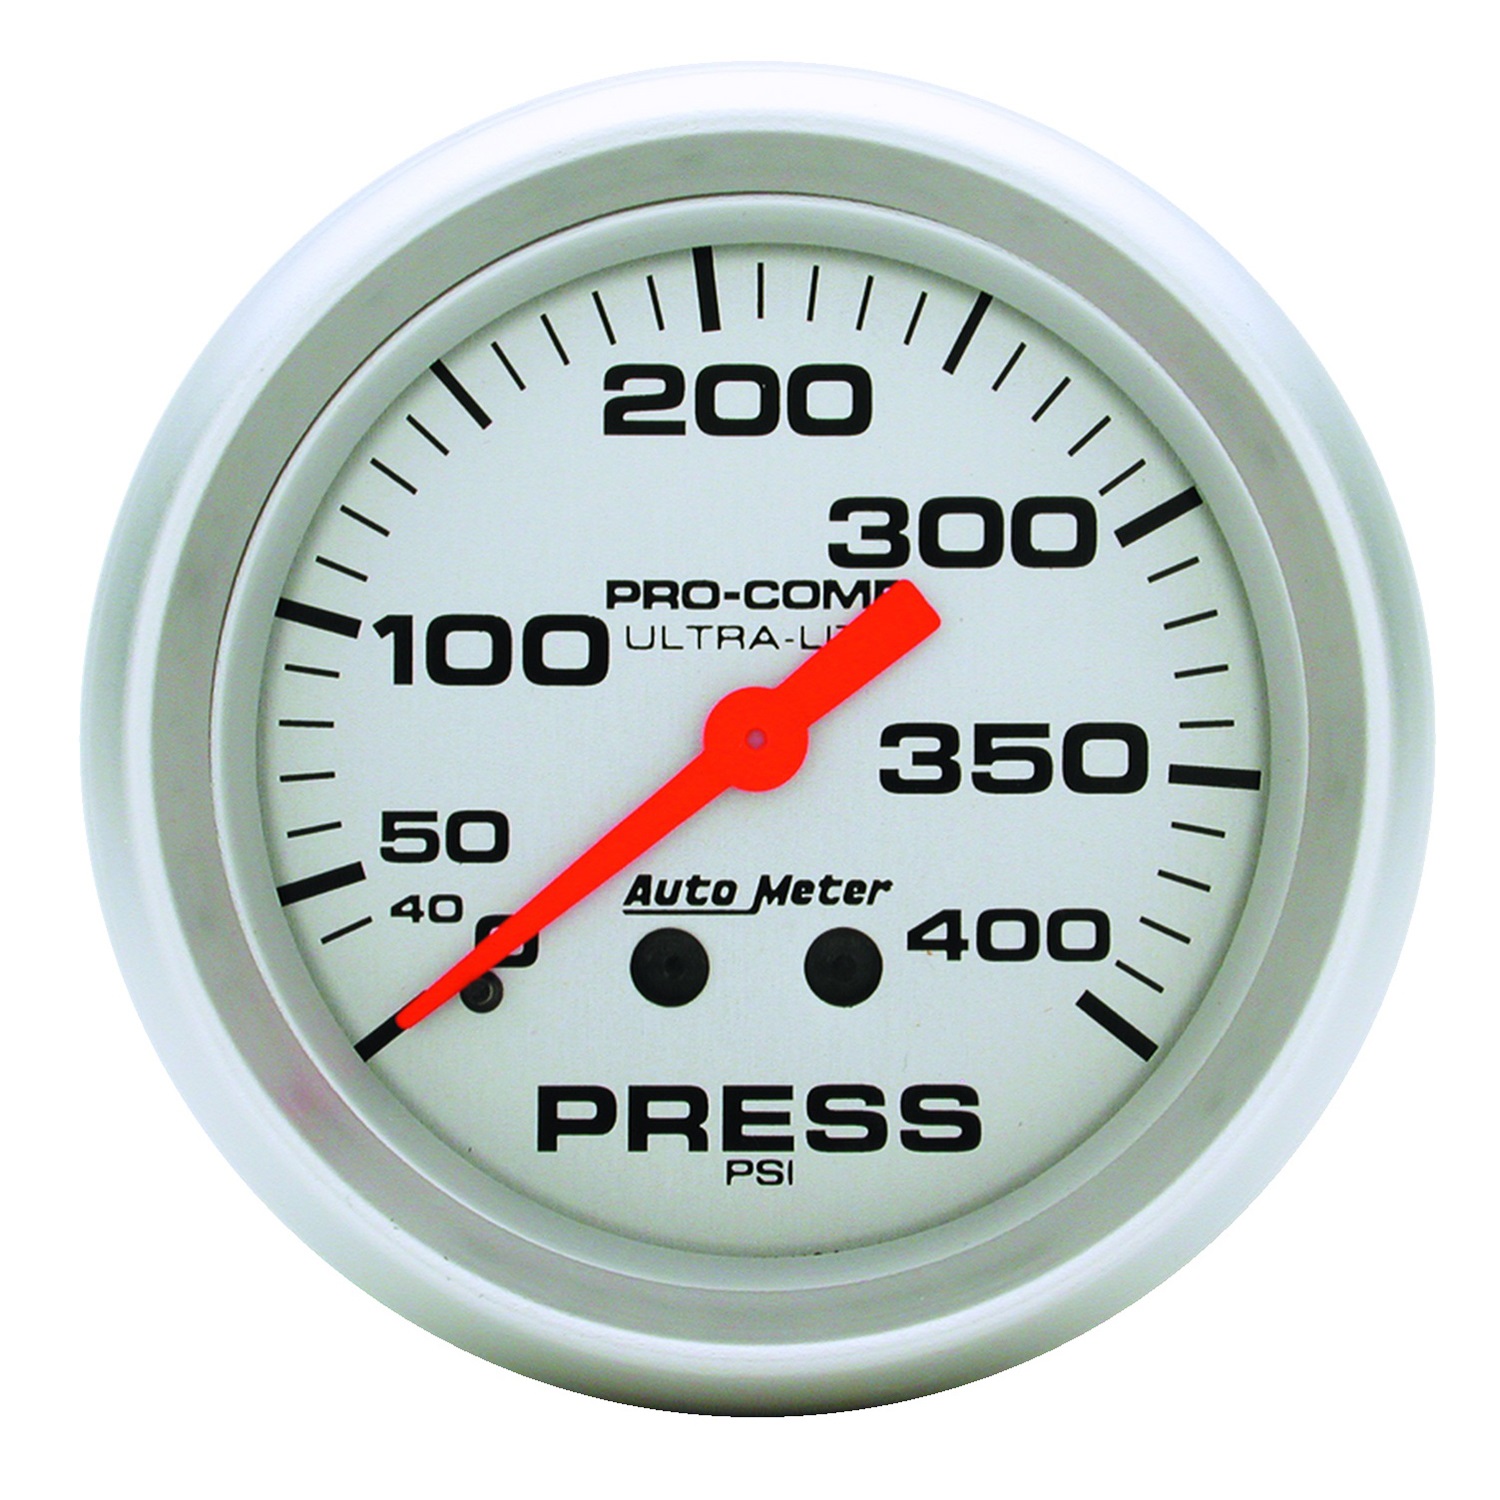 Auto Meter Auto Meter 4424 Ultra-Lite; Mechanical Pressure Gauge